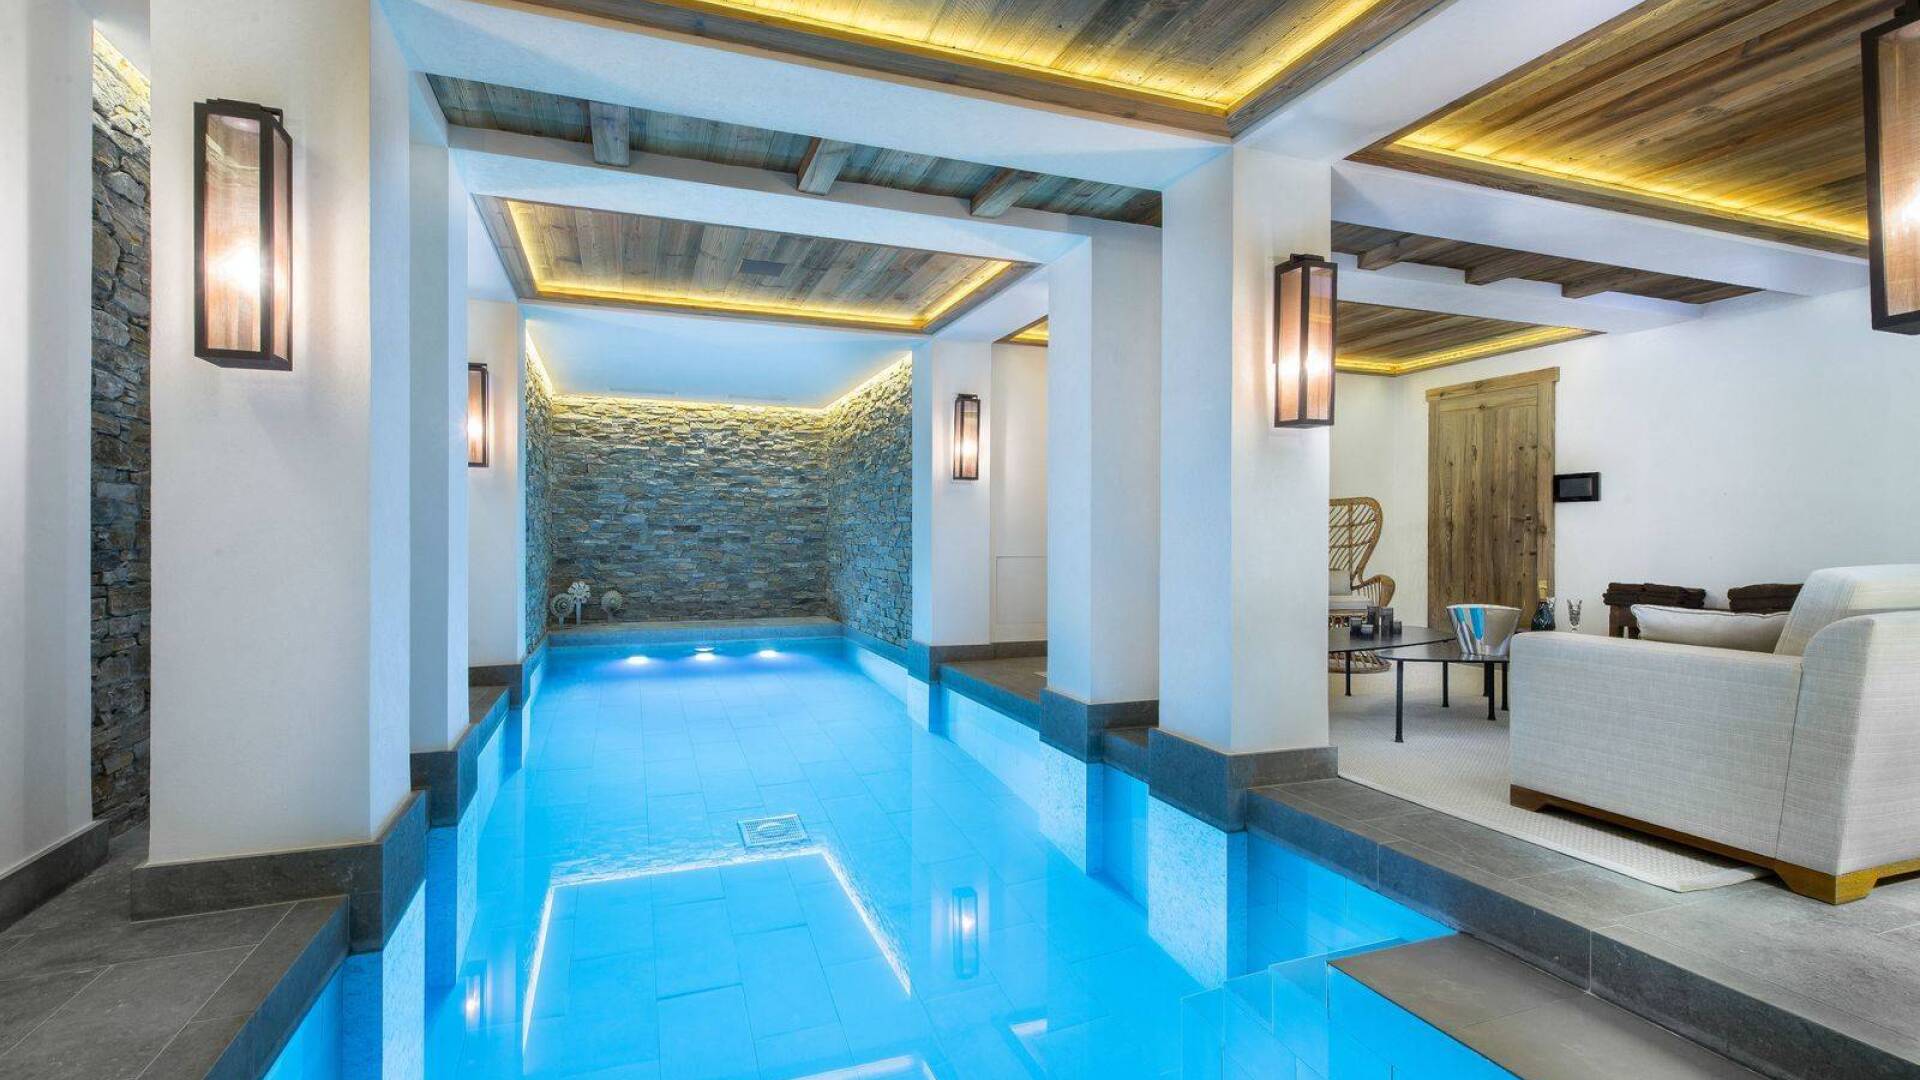 luxury large indoor pool